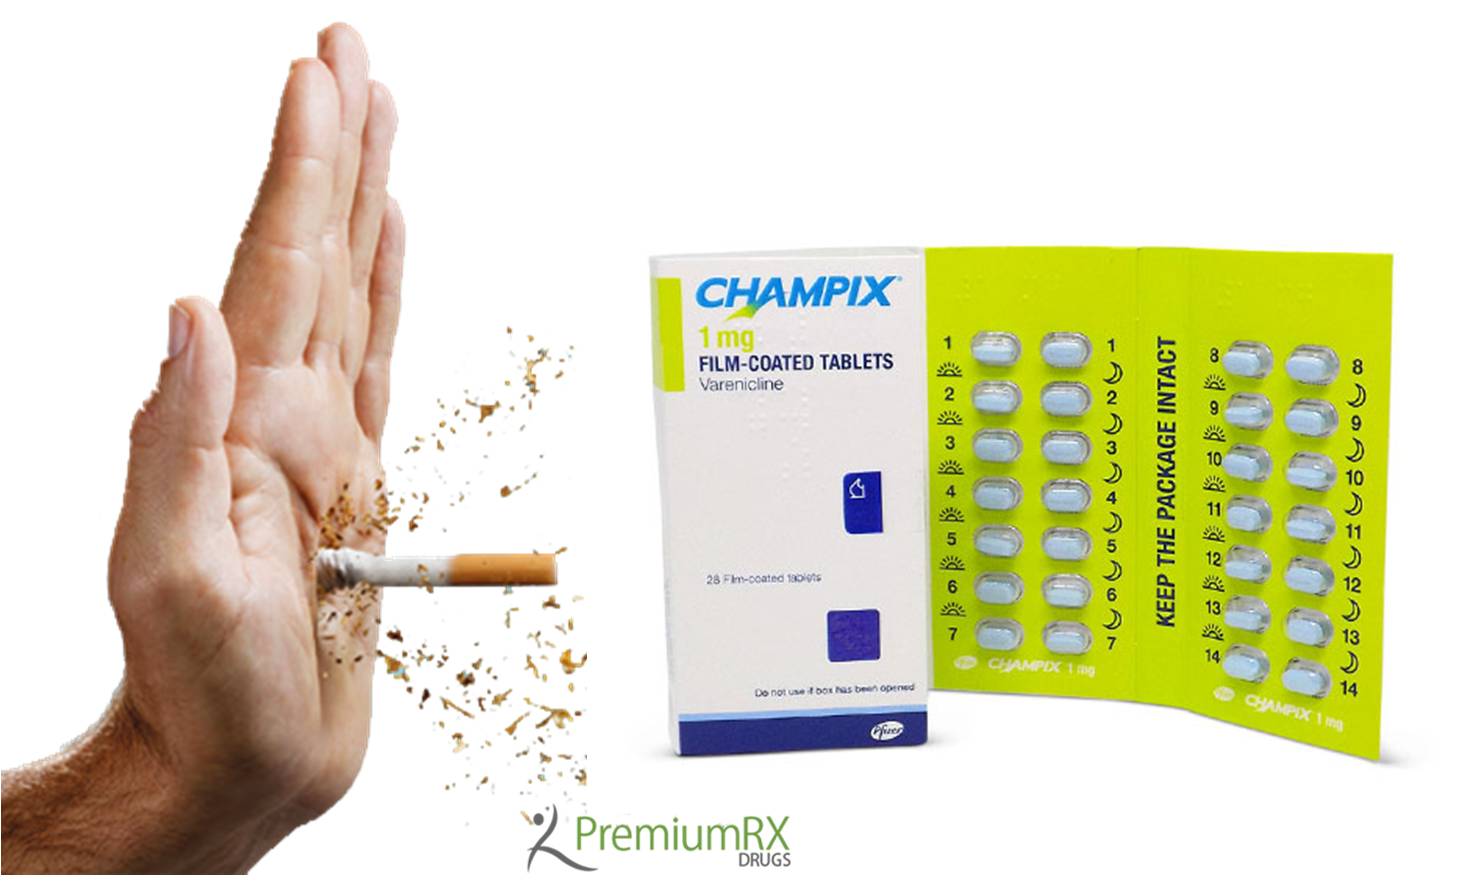 Generic Chantix with Prescription Online